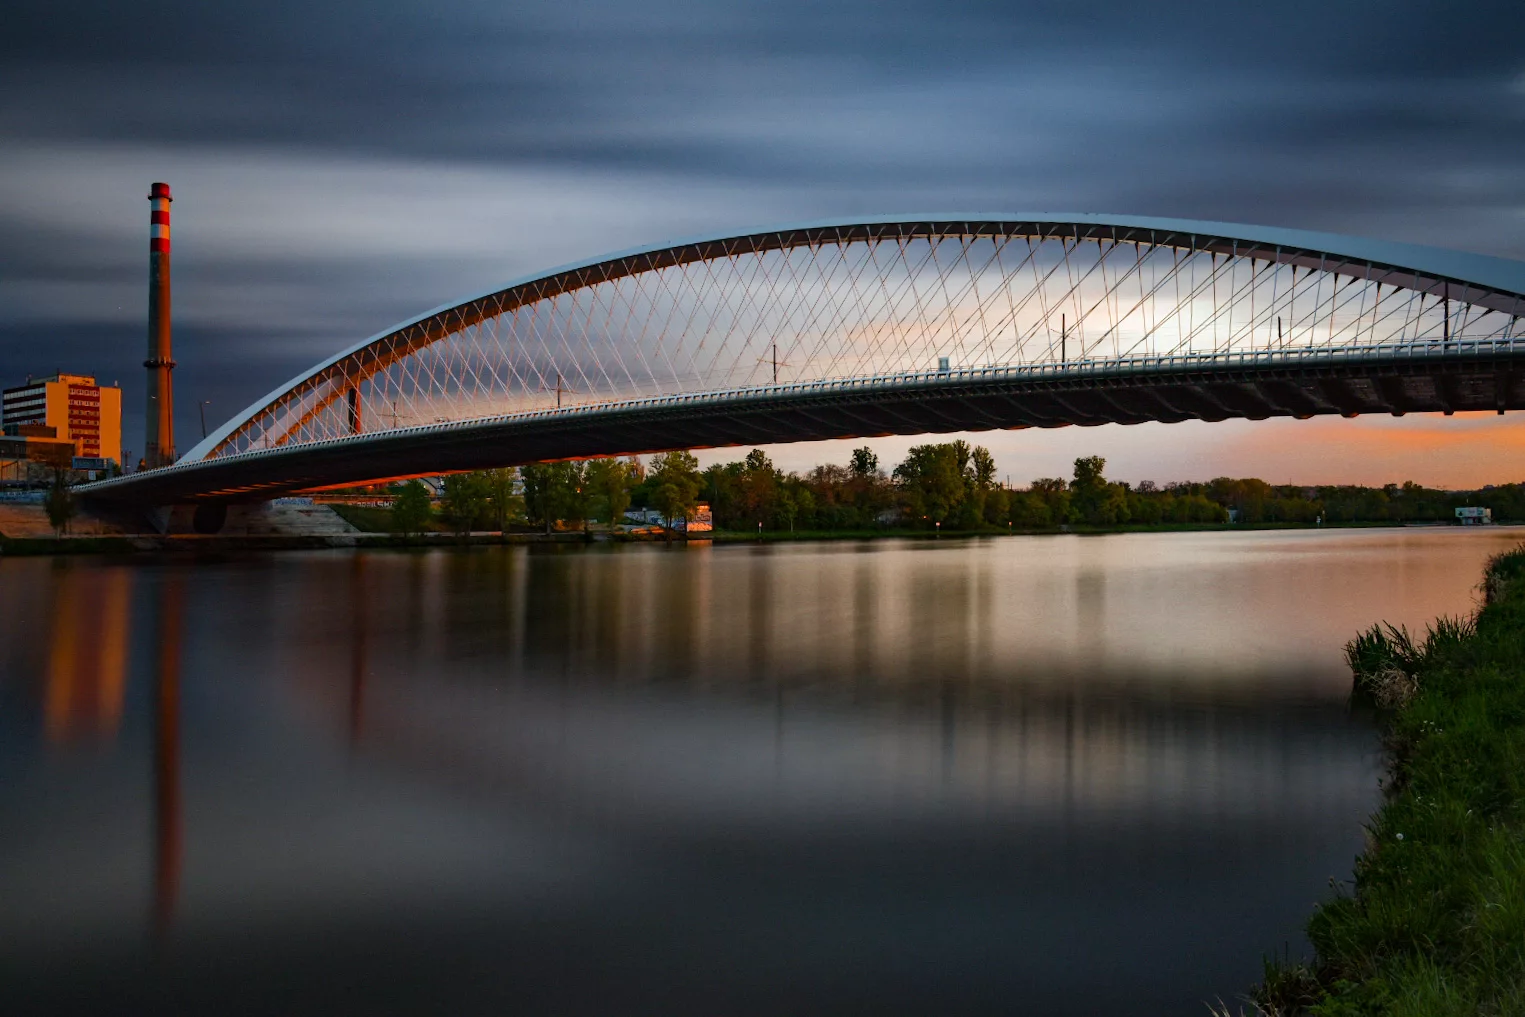 The bridge at Troja, Czech Republic